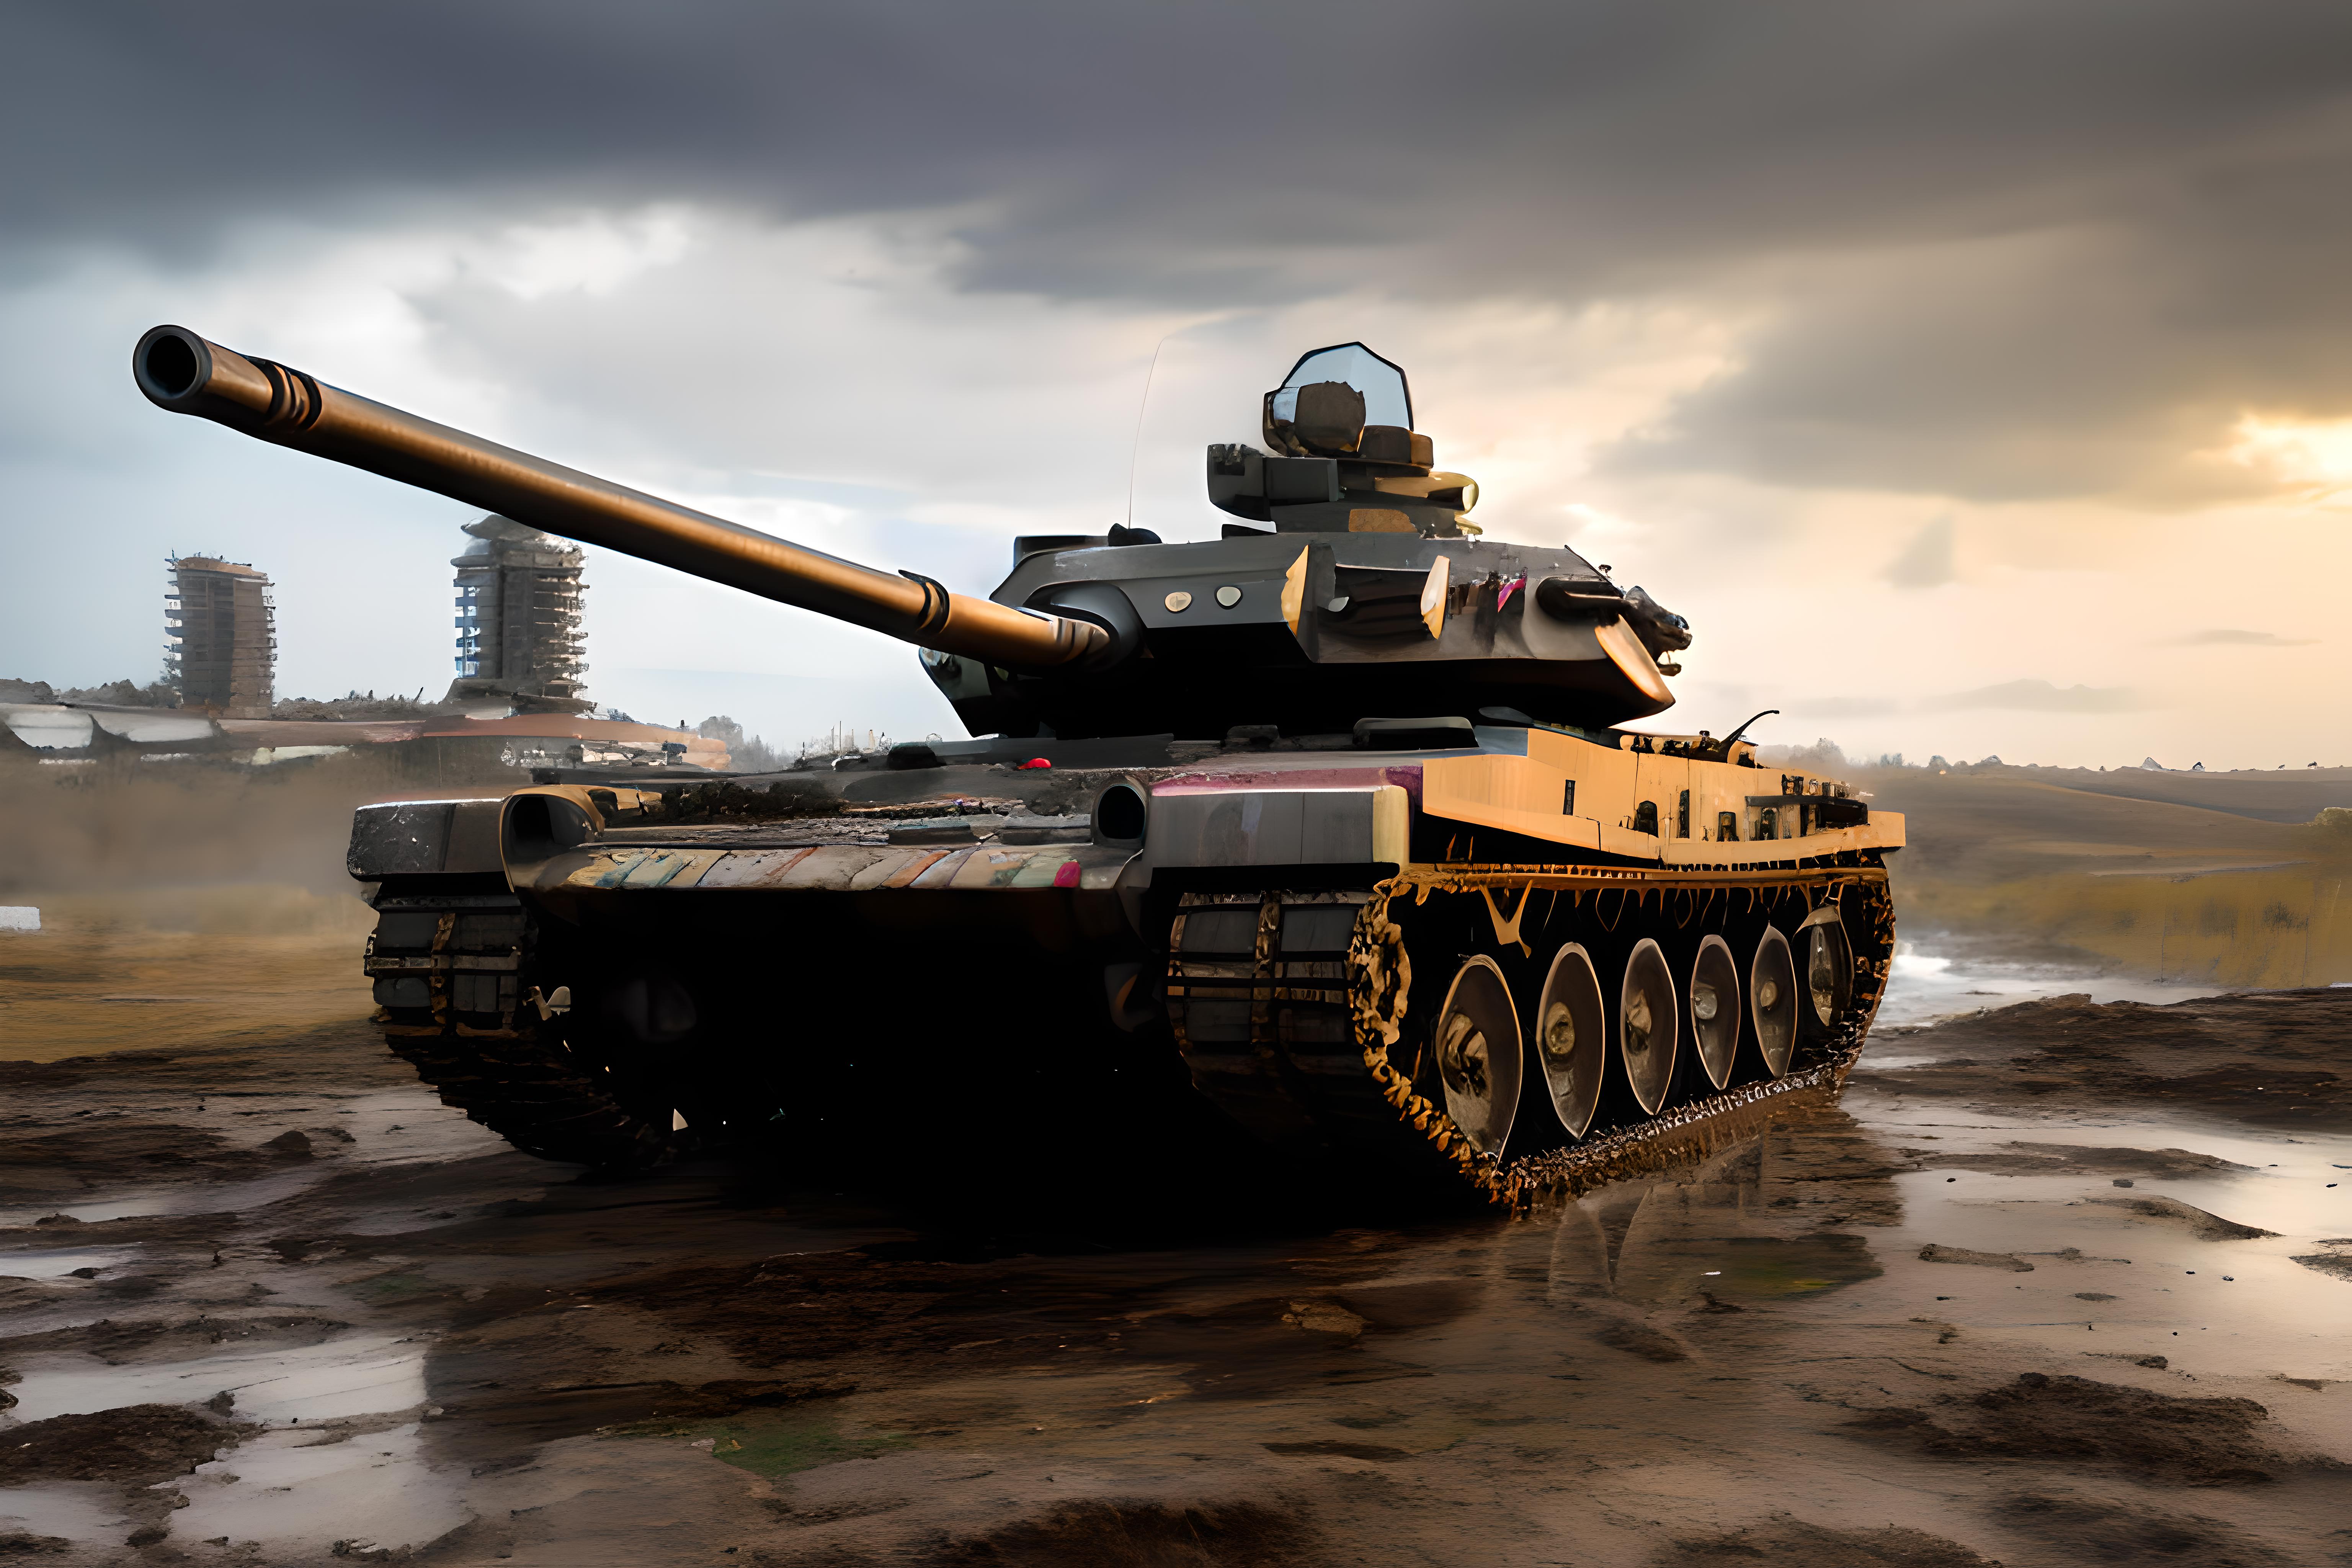 Military Tanks - Battle Cars - HyperRealistic LoRA image by sayurio